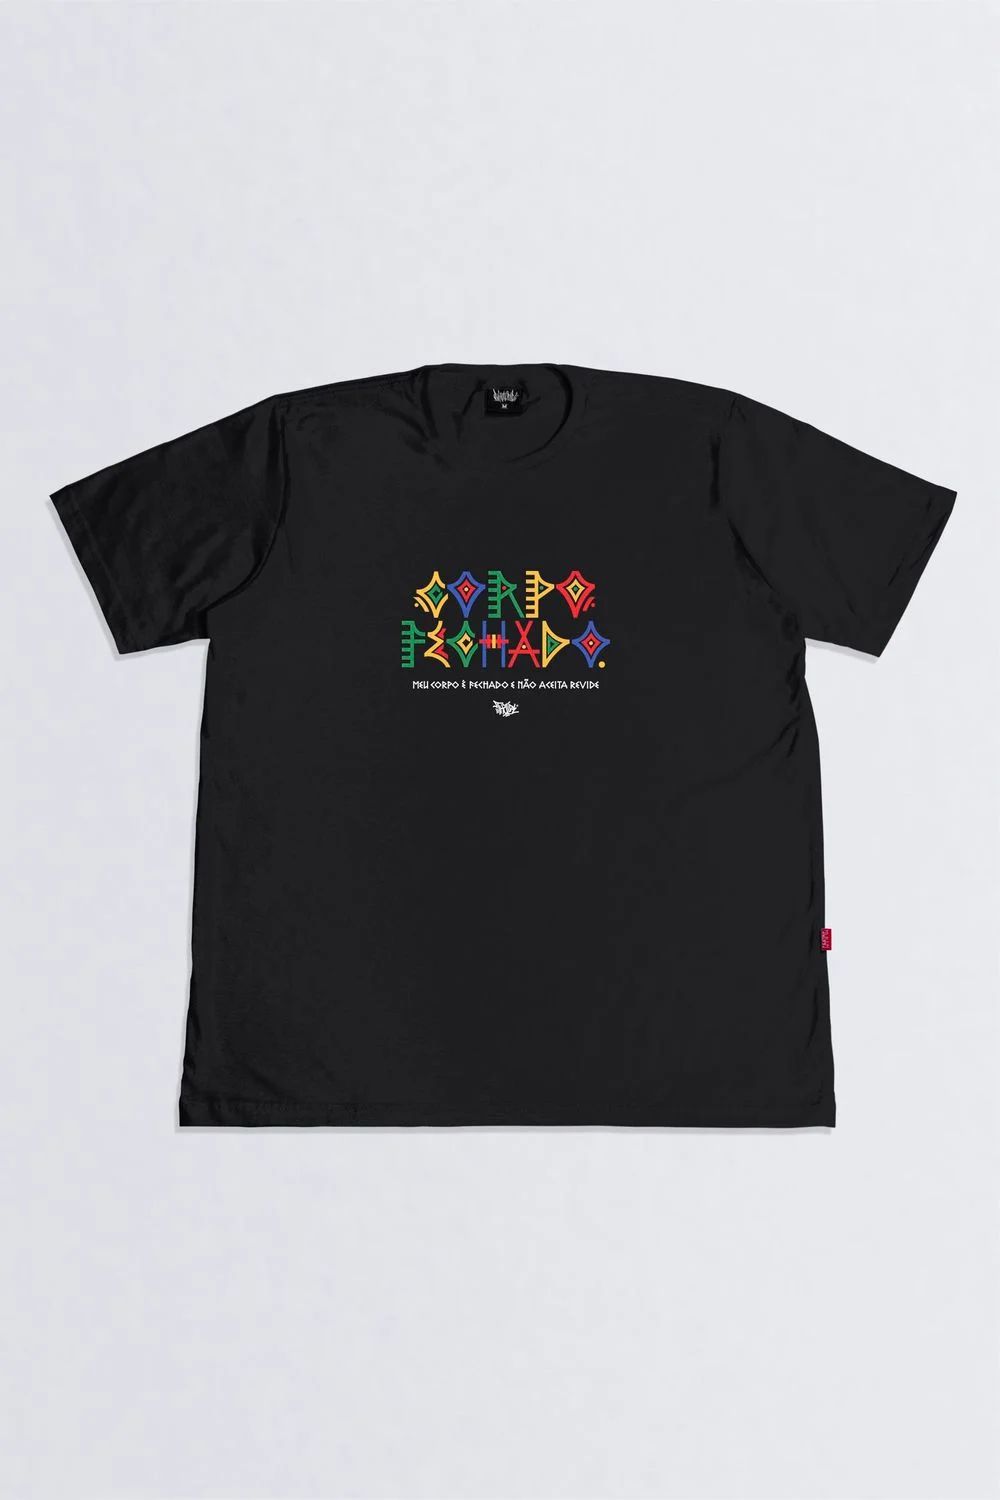 Camiseta Chronic COGU 3537 - Preta - JD Skate Shop